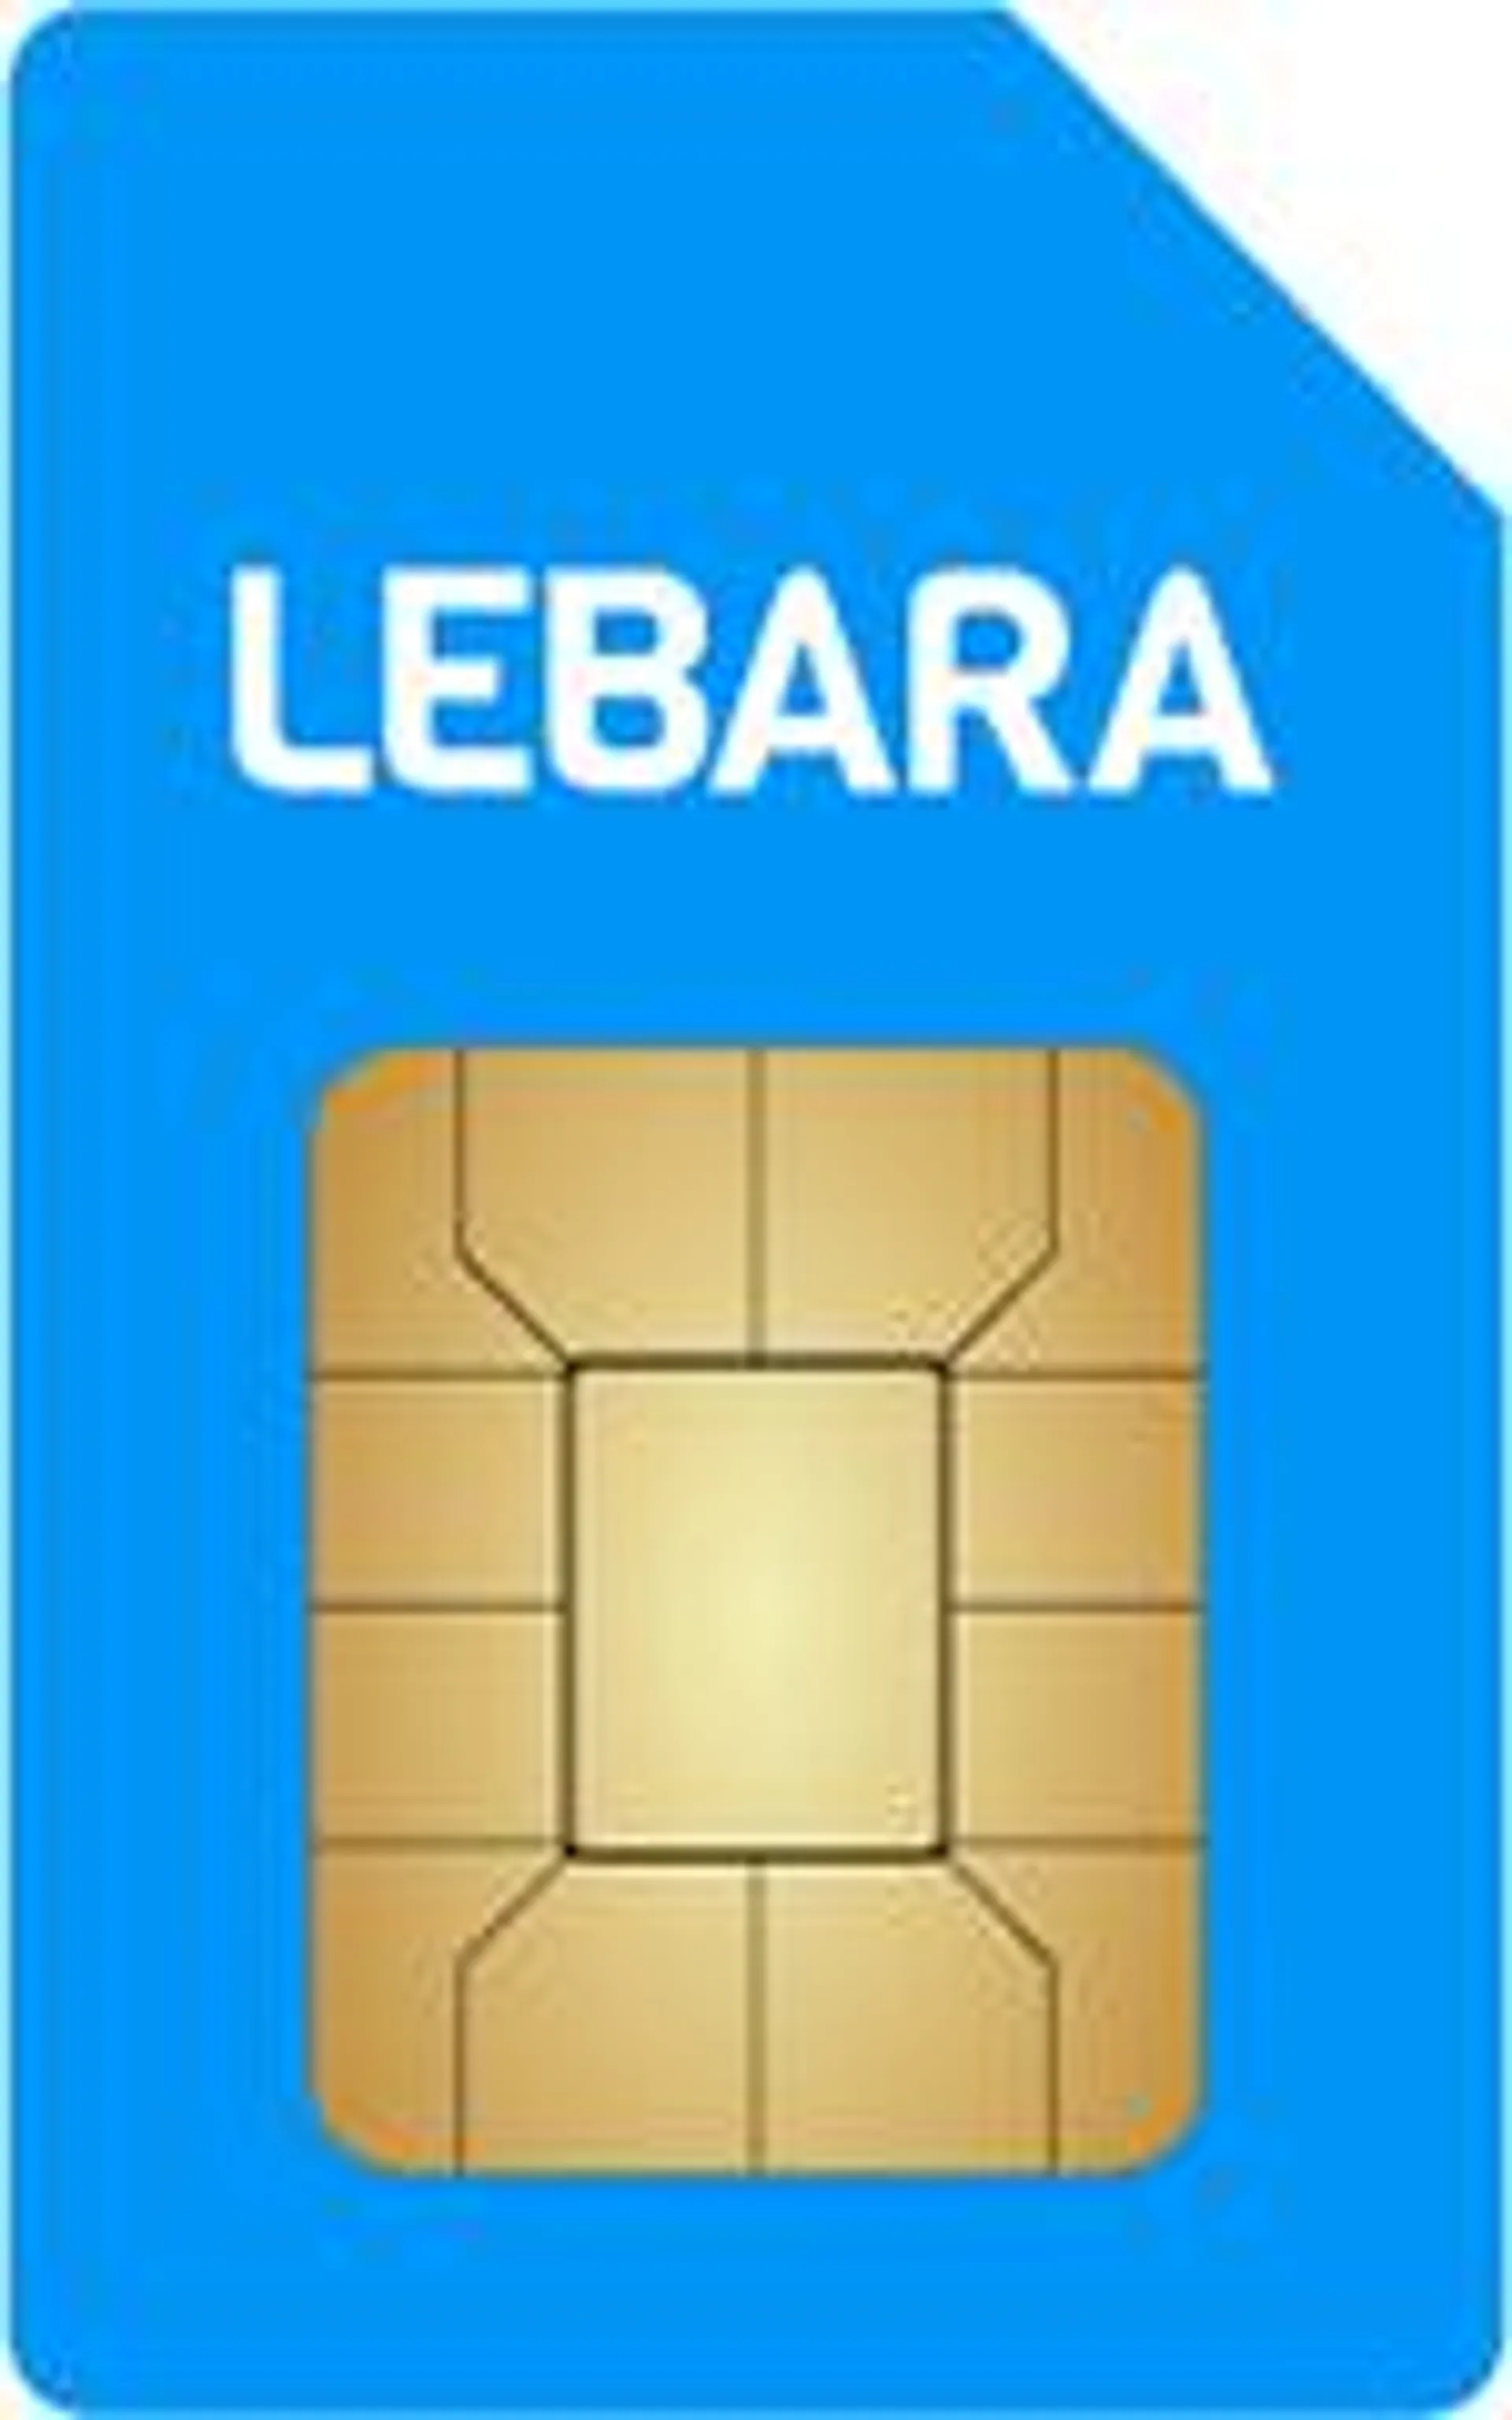 Lebara 150 min + 150 sms + 3 GB 4G - 2 jaar - Sim Only